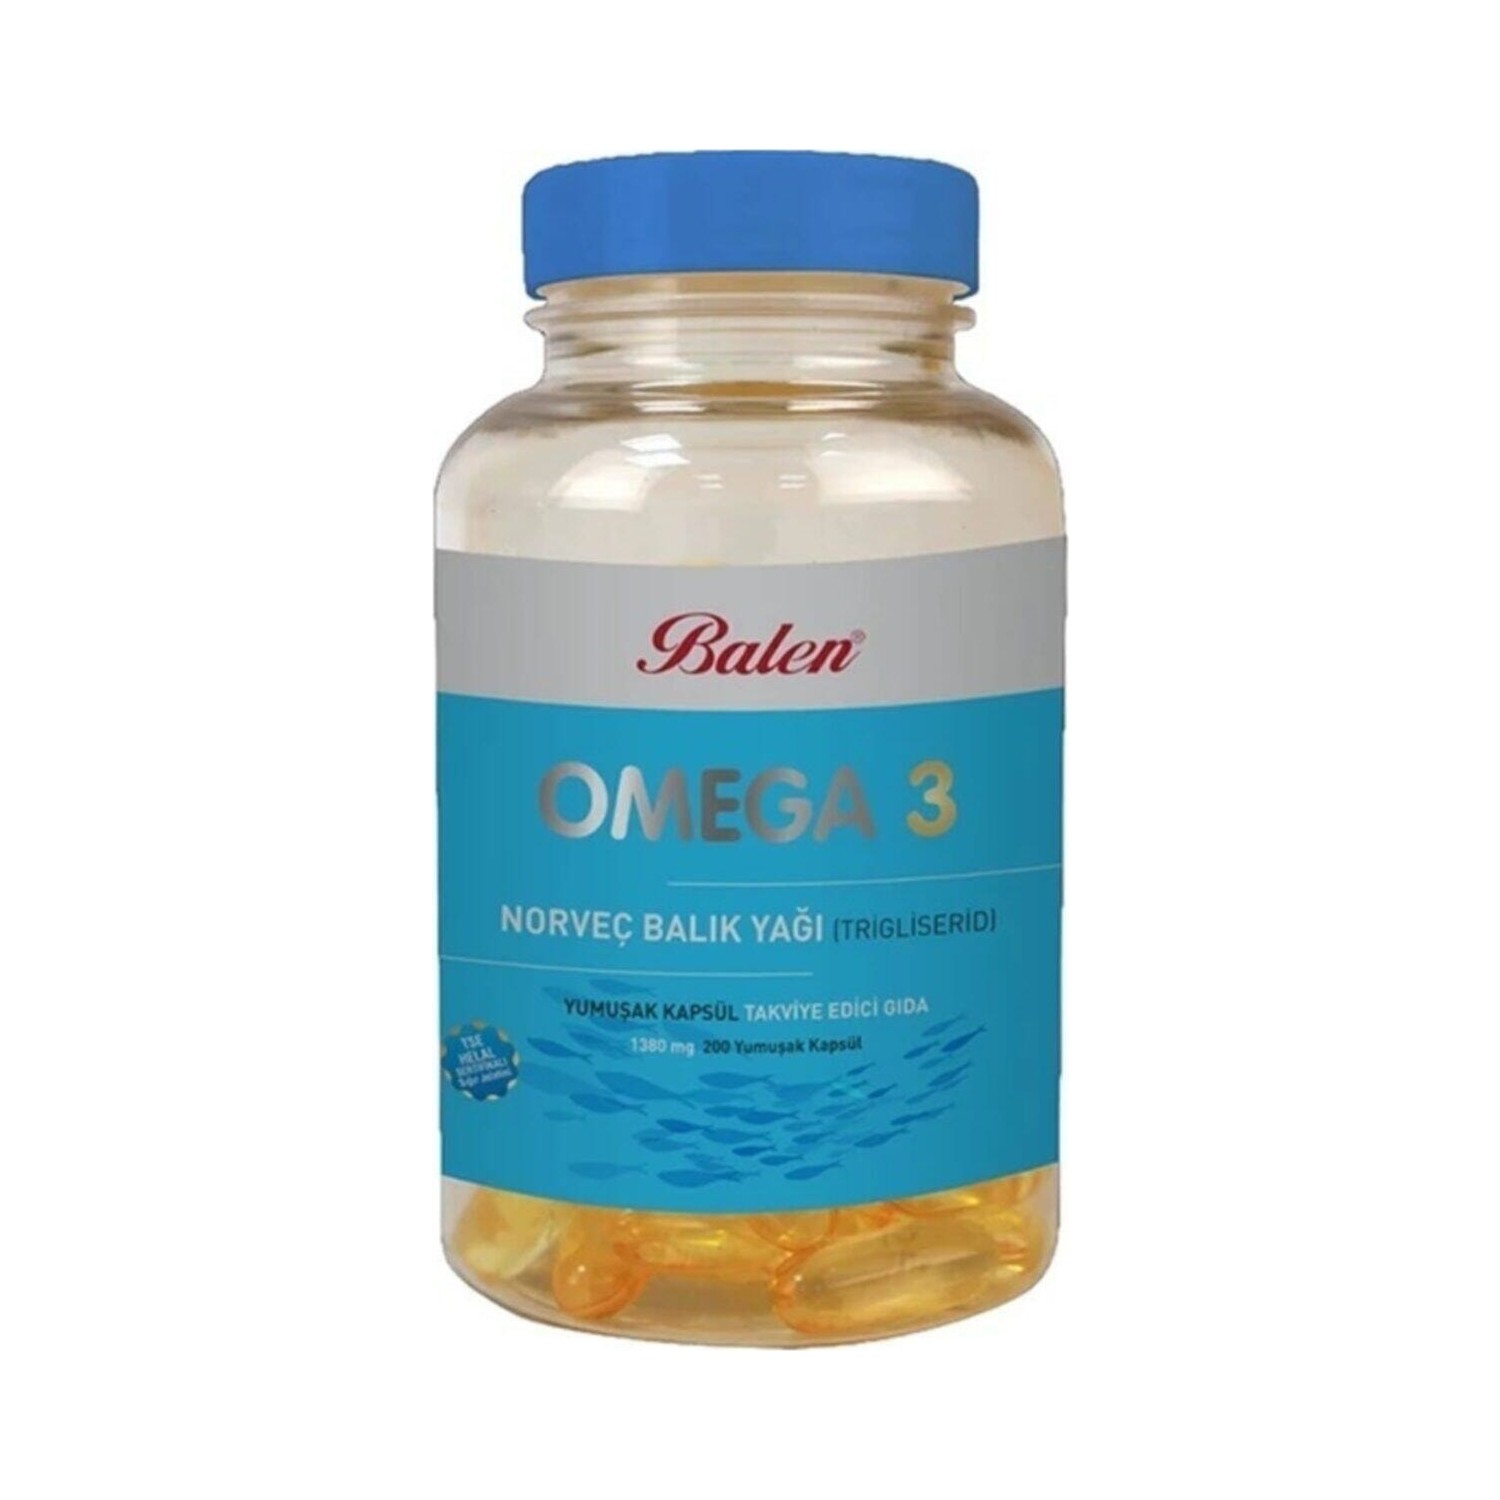 Рыбий жир Balen Omega 3, 200 капсул, 1380 мг рыбий жир balen omega 3 100 капсул 500 мг 3 штуки